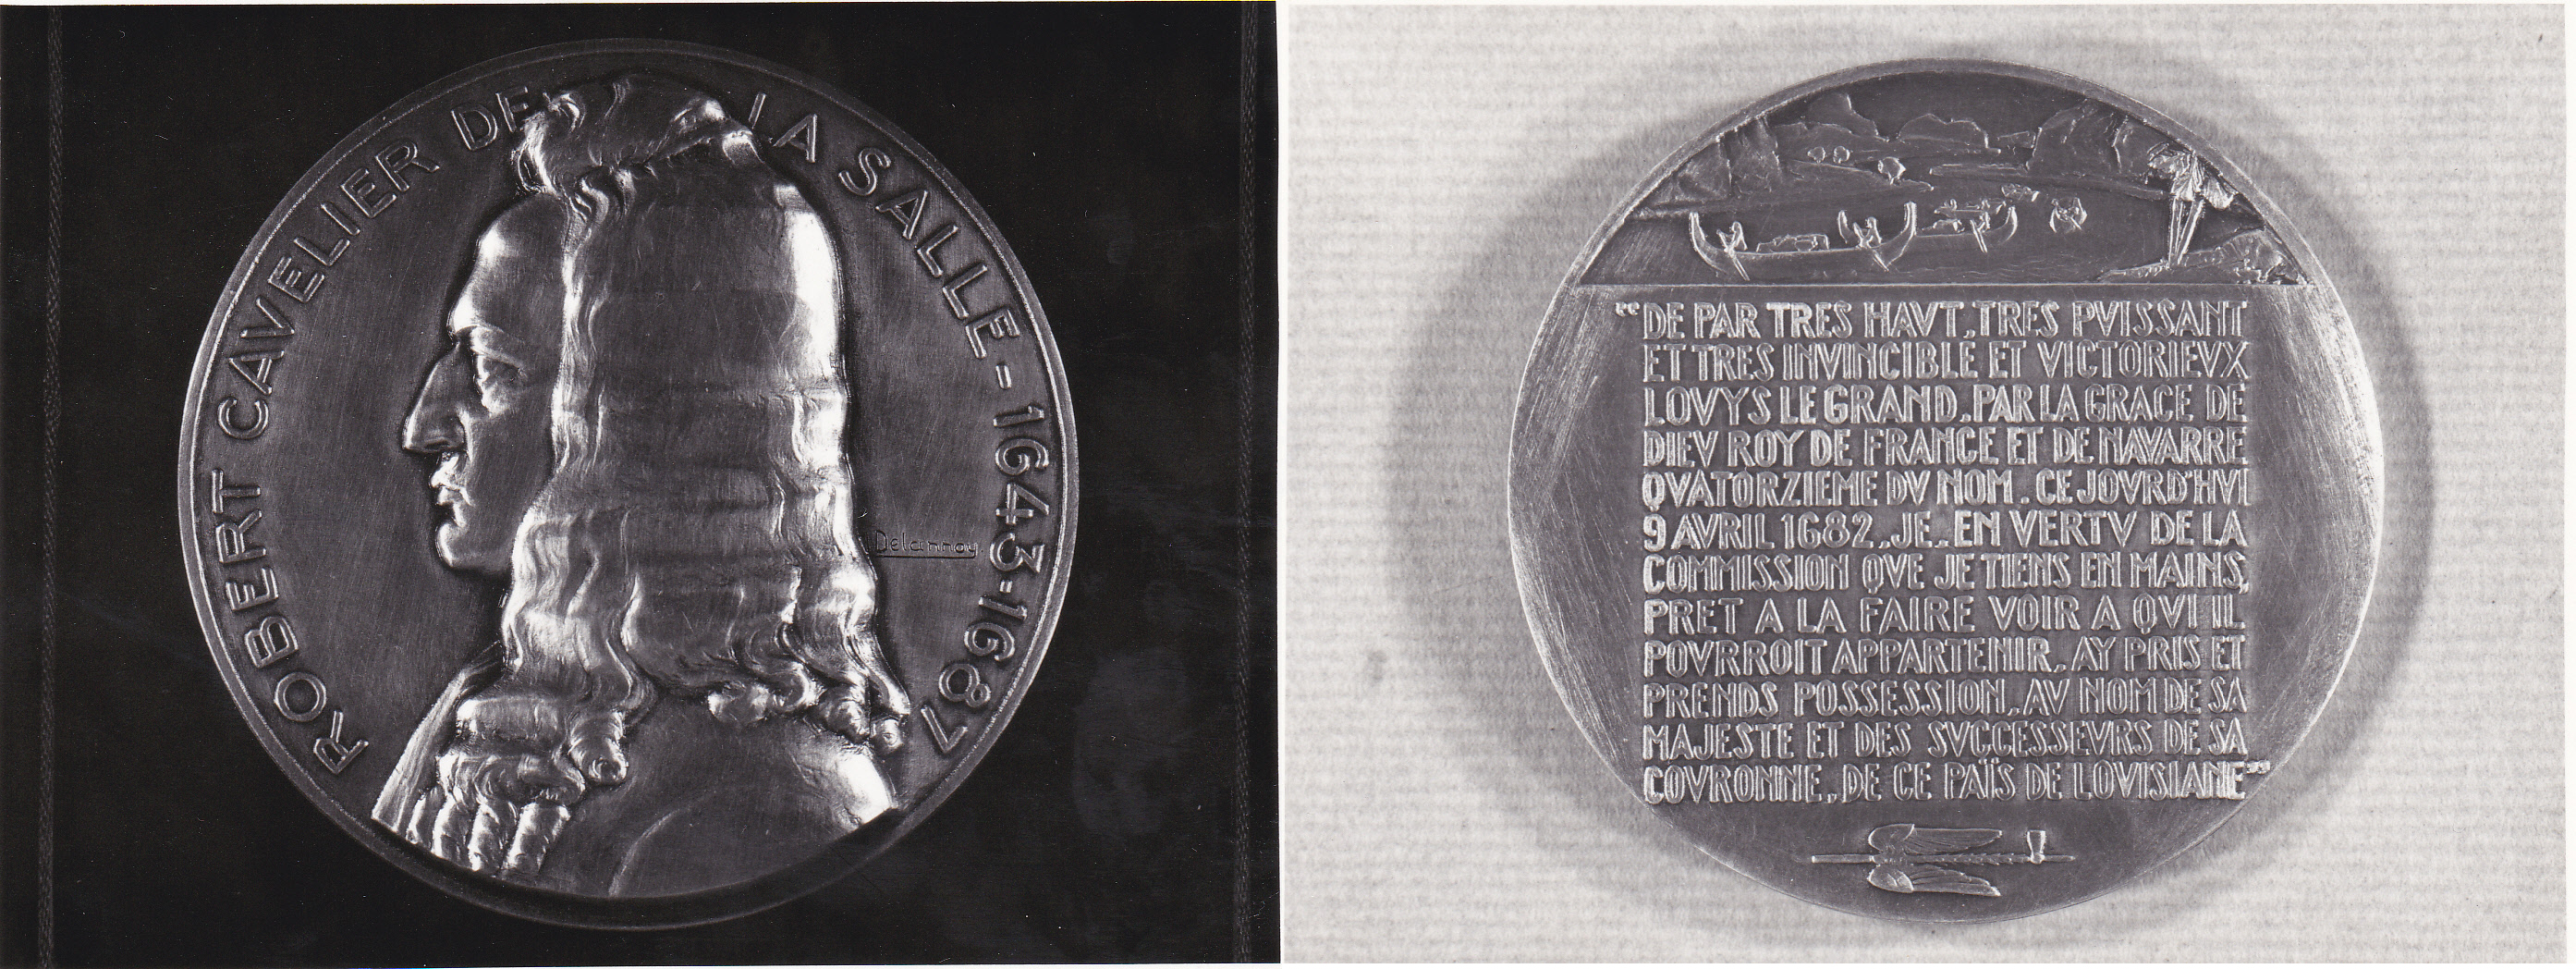 Object: Commemorative Coin